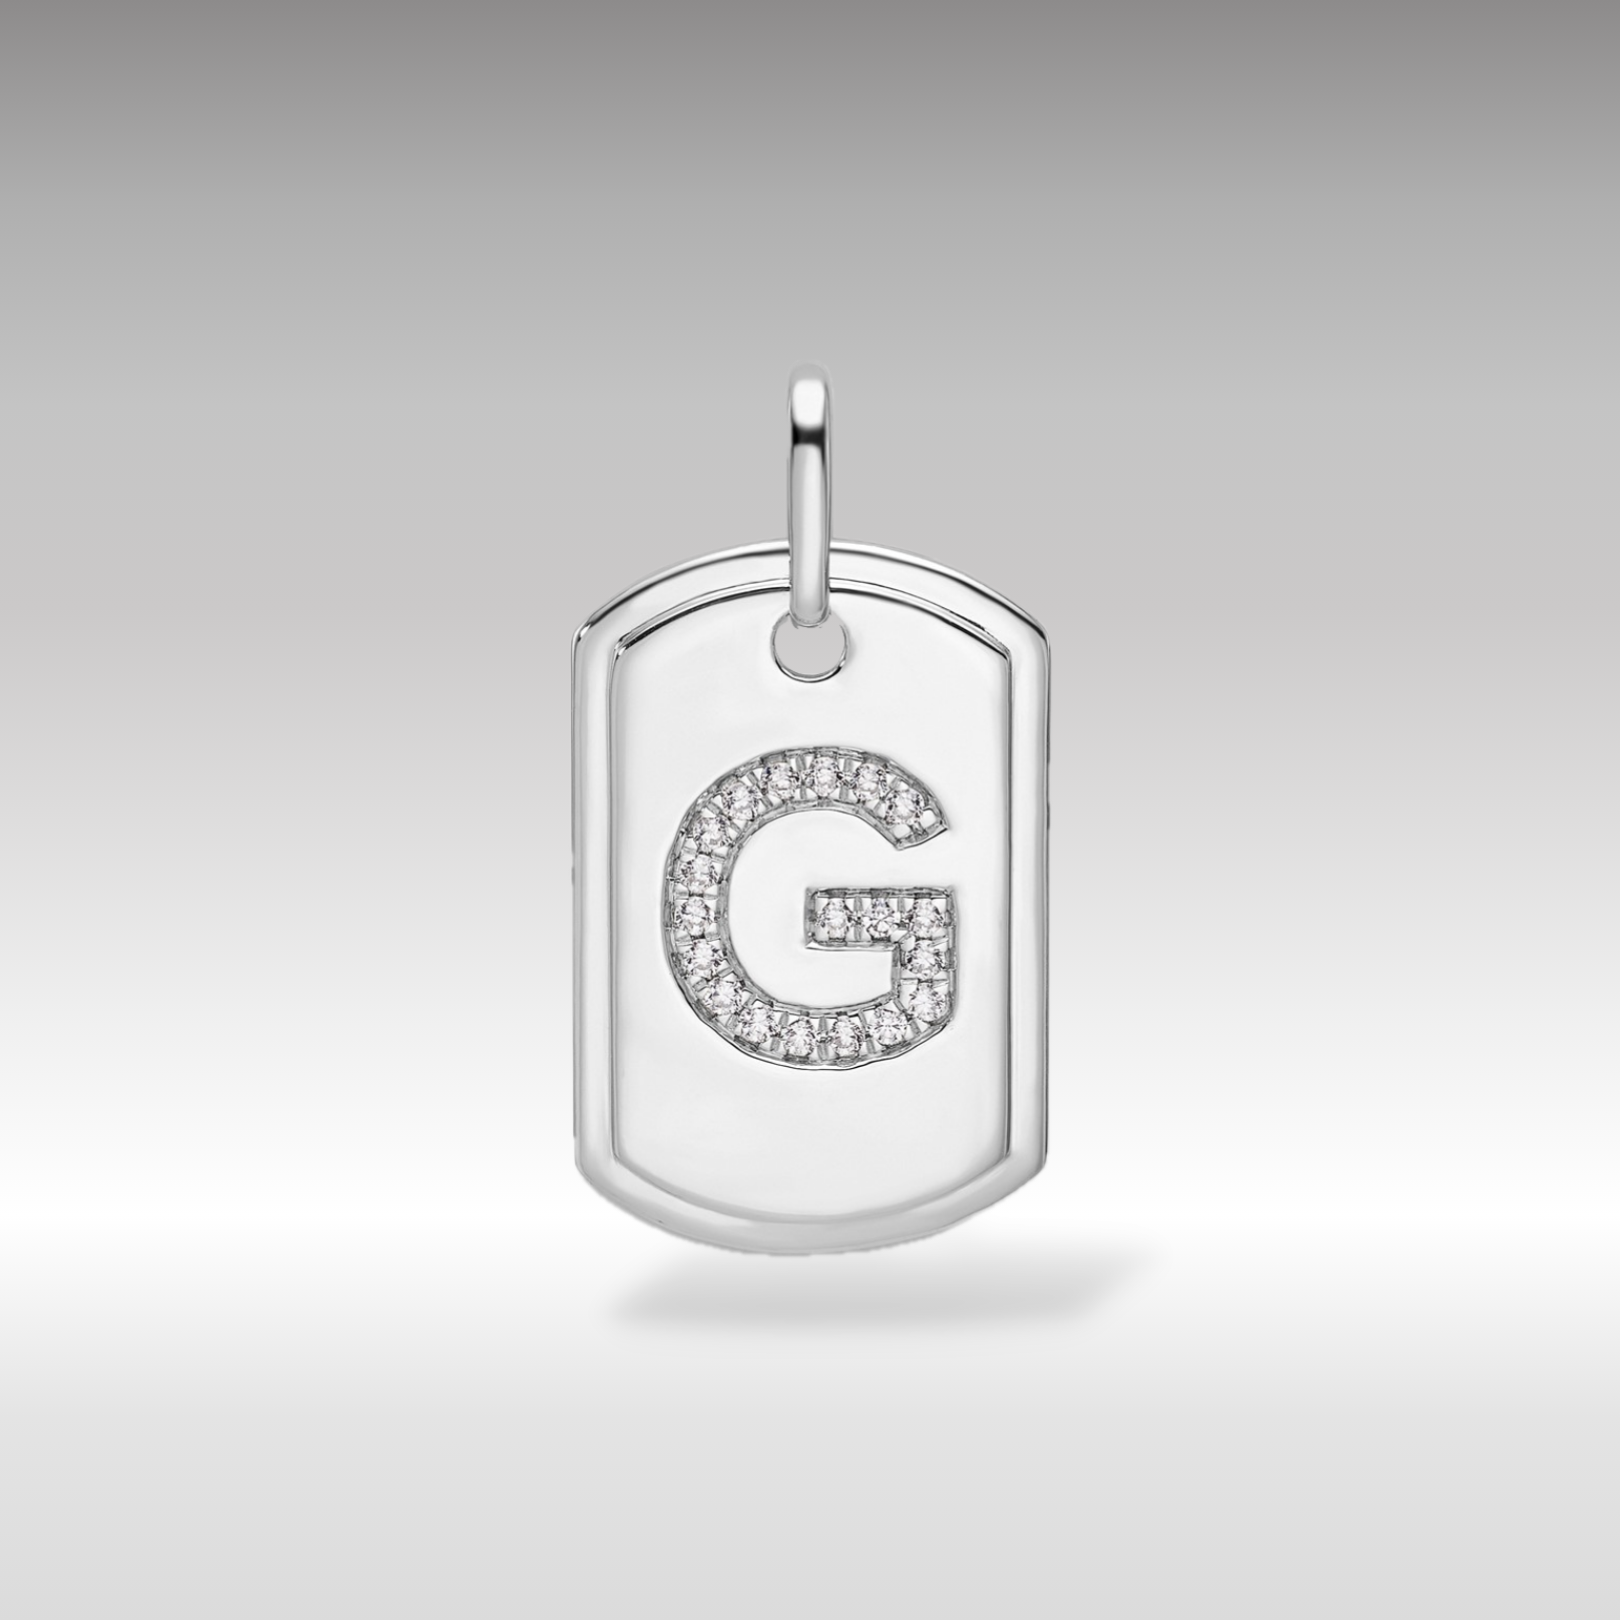 14K White Gold Initial "G" Dog Tag With Genuine Diamonds - Charlie & Co. Jewelry